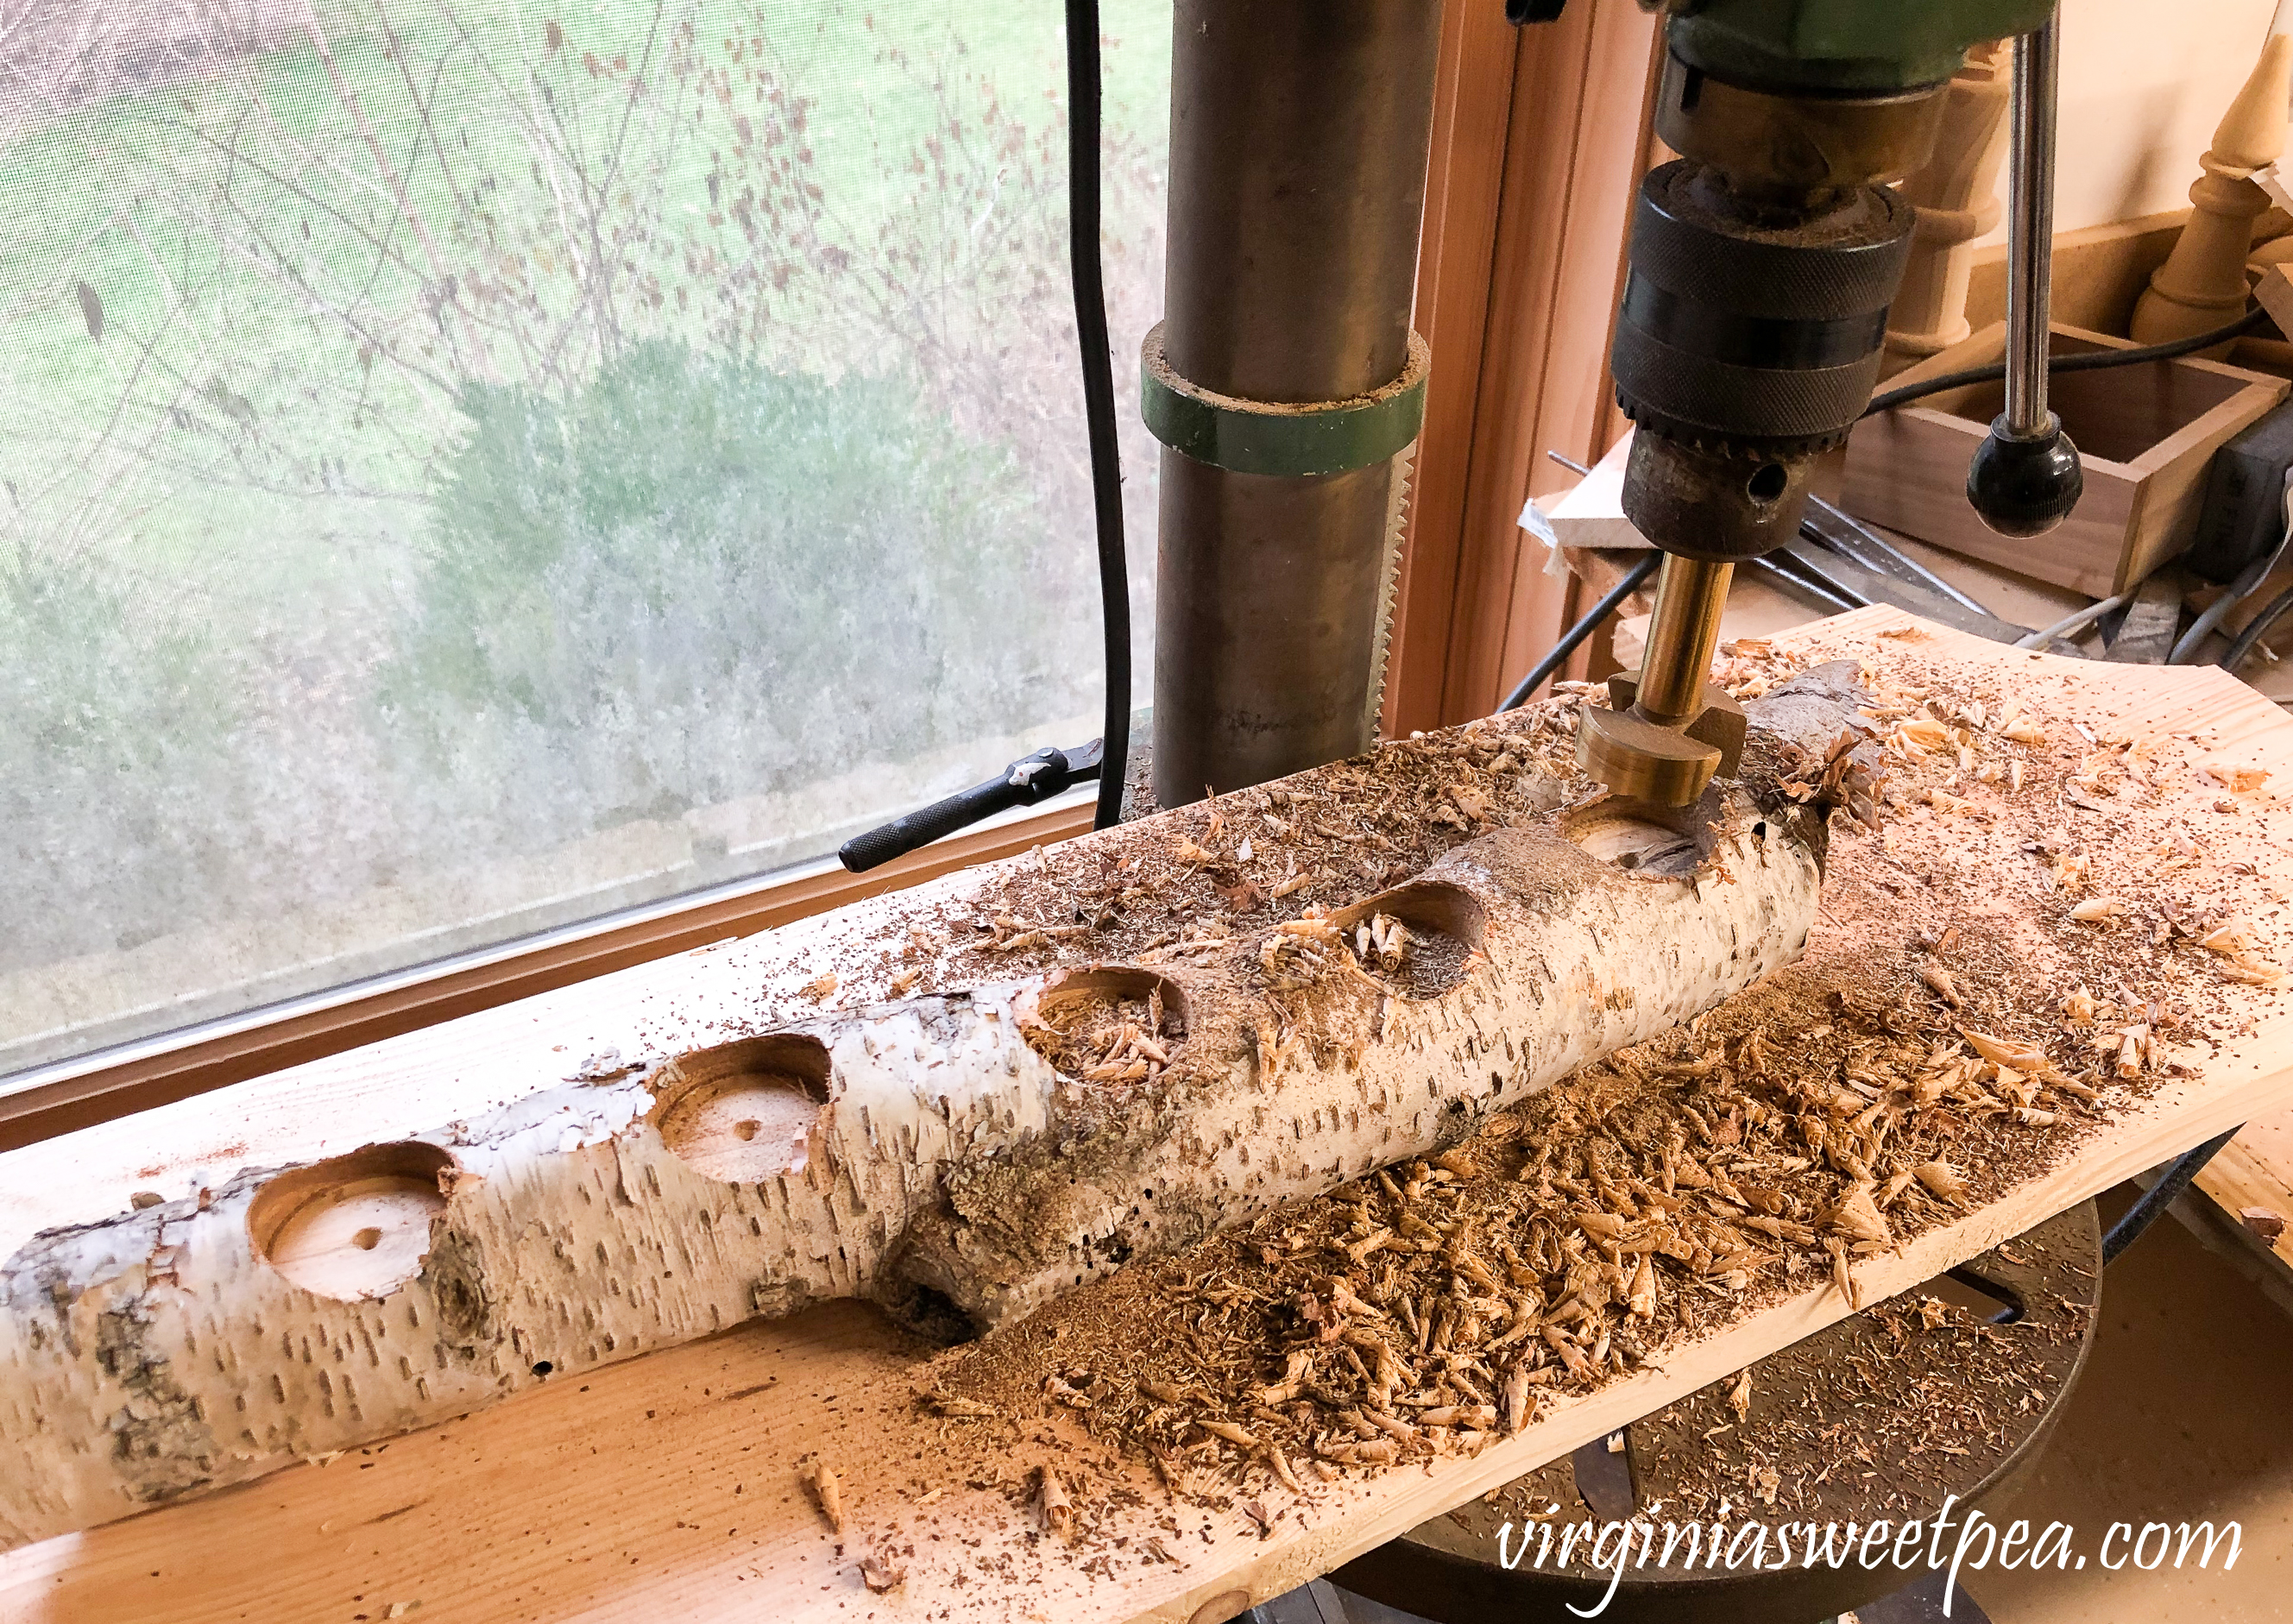 How to Make a DIY Yule Log - This tutorial teaches you how to make a yule log for your home. #diy #yulelog #diyyulelog